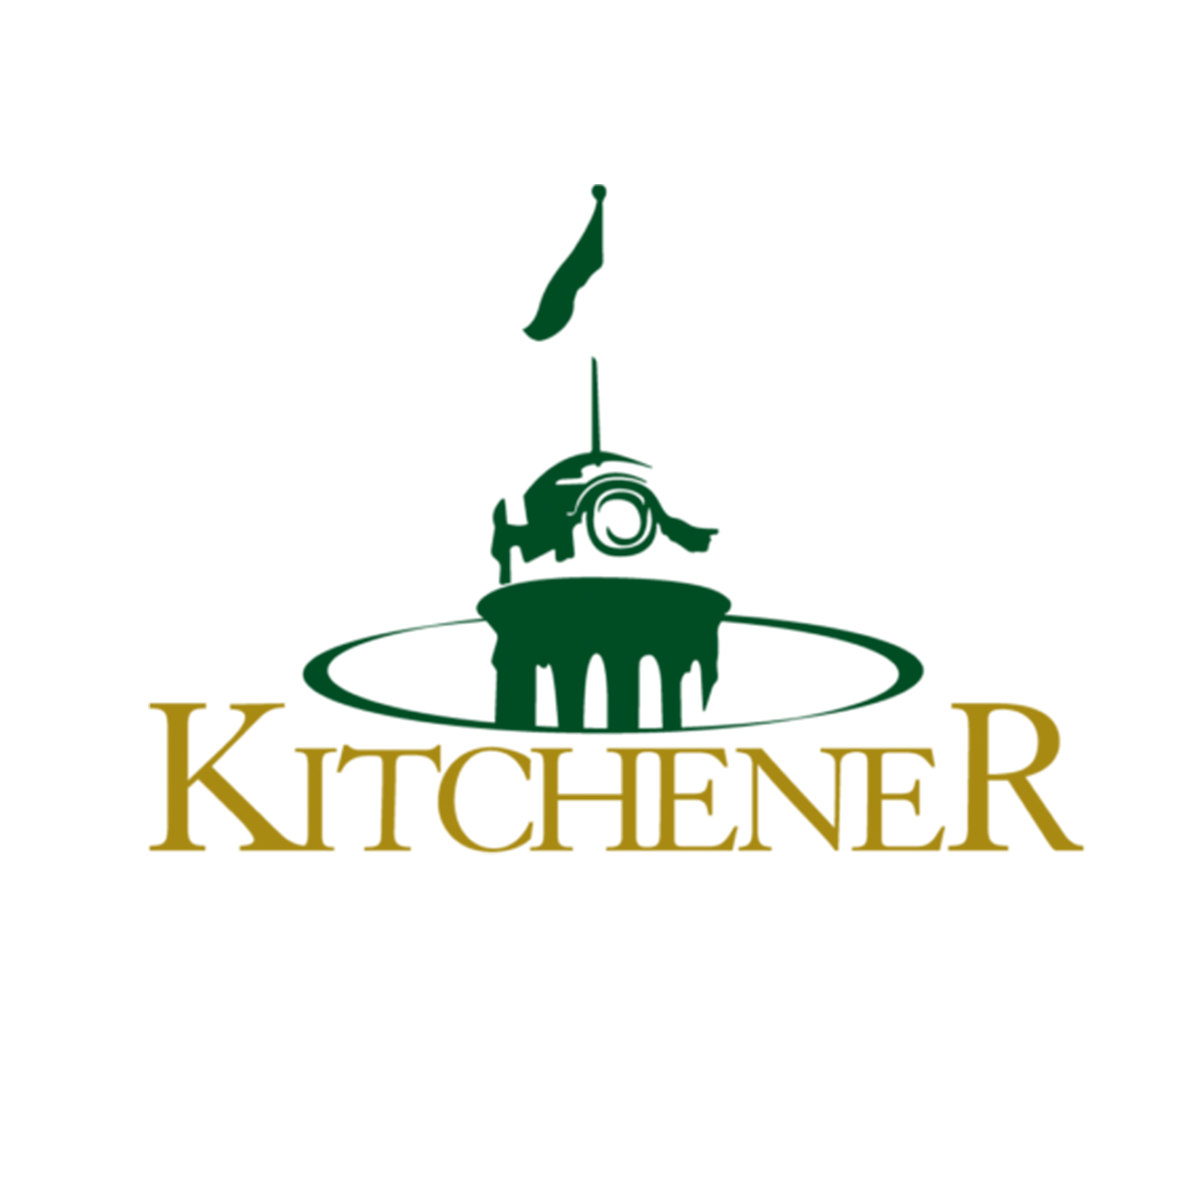 City of Kitchenere logo